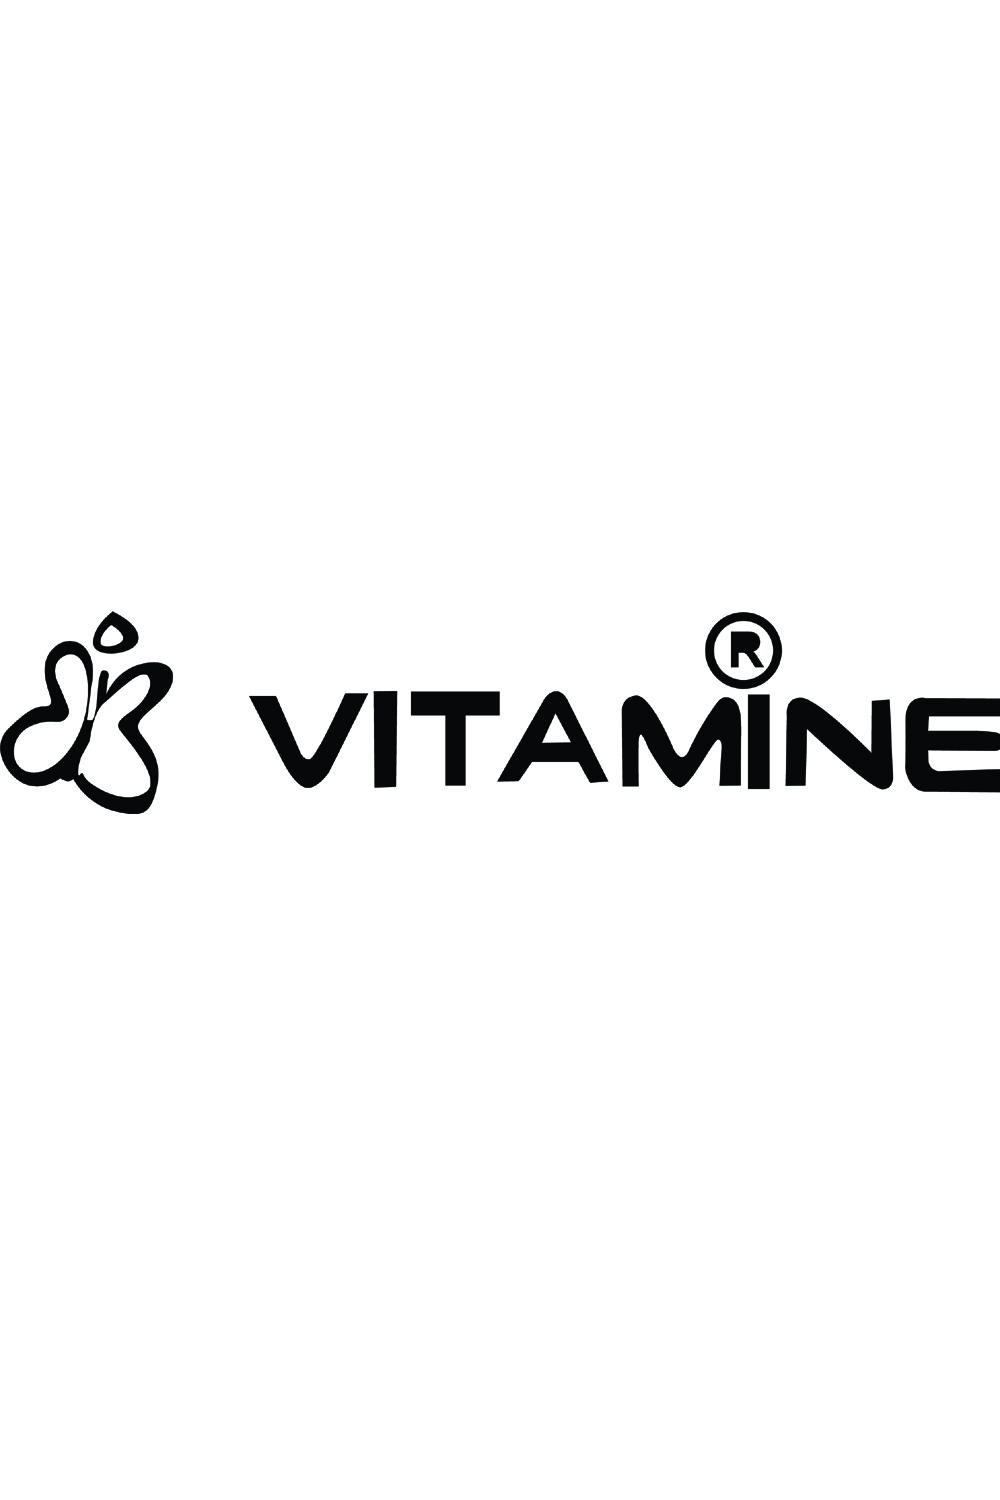 Vitamine T Shirt pinterest preview image.